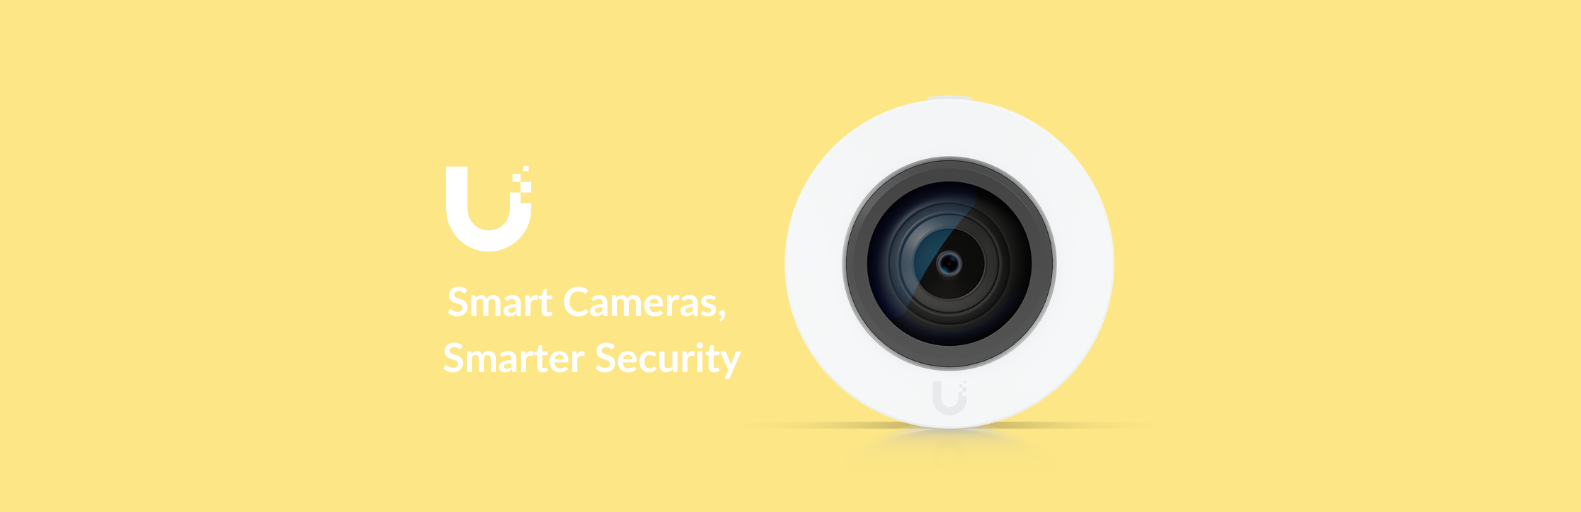 Smart Cameras, Smarter Security